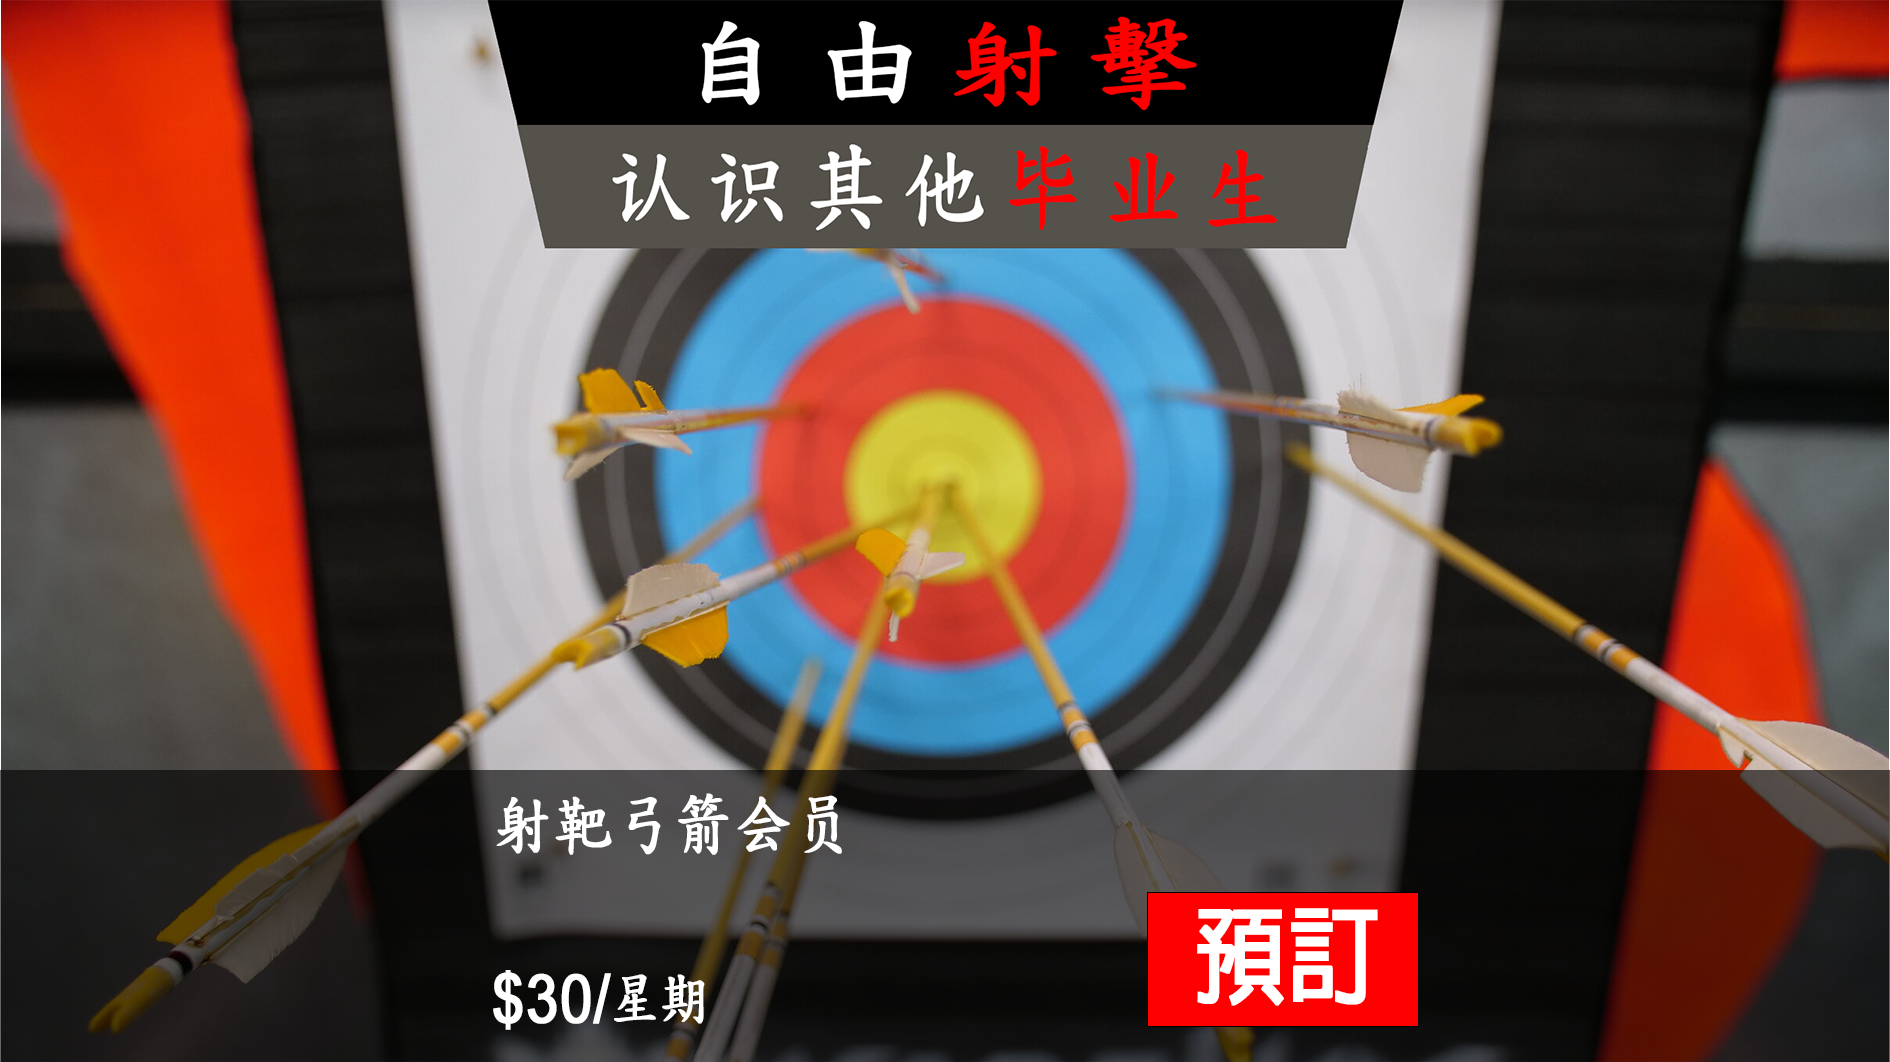 Target archery Membership.png